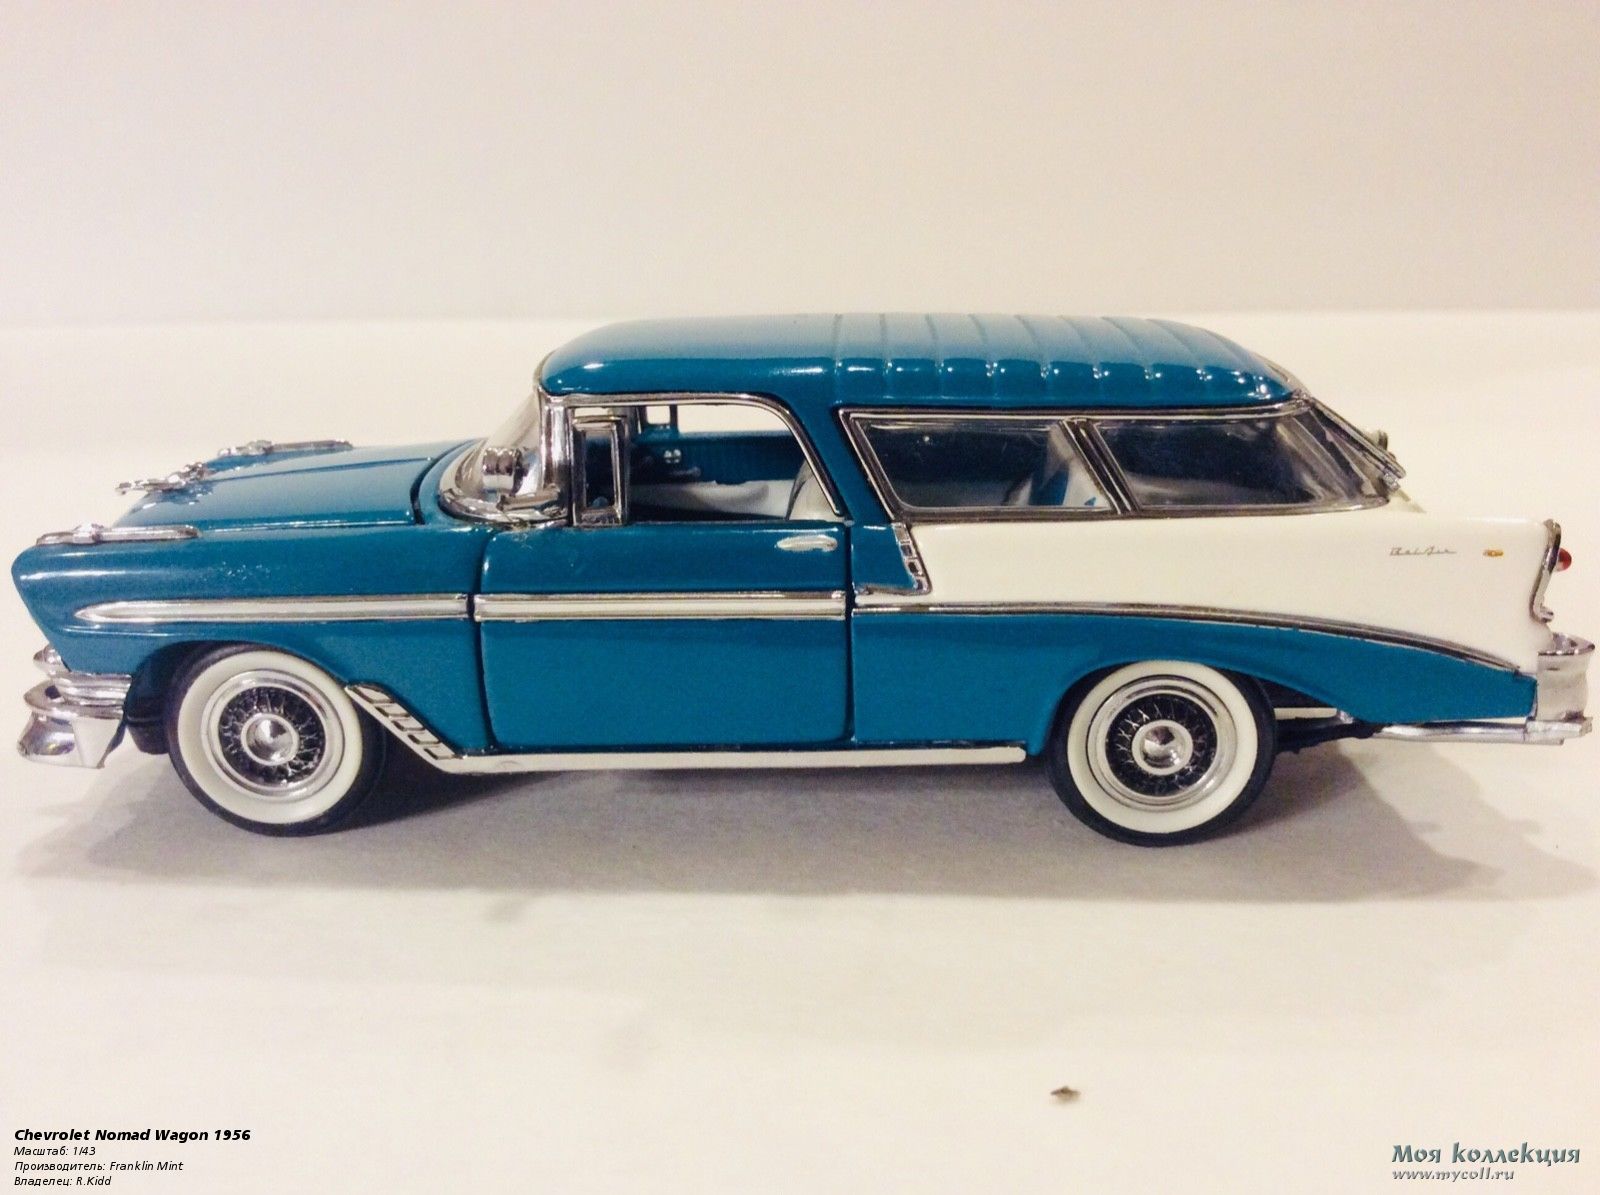 Chevrolet Nomad Wagon 1956 - 1/43 Franklin Mint